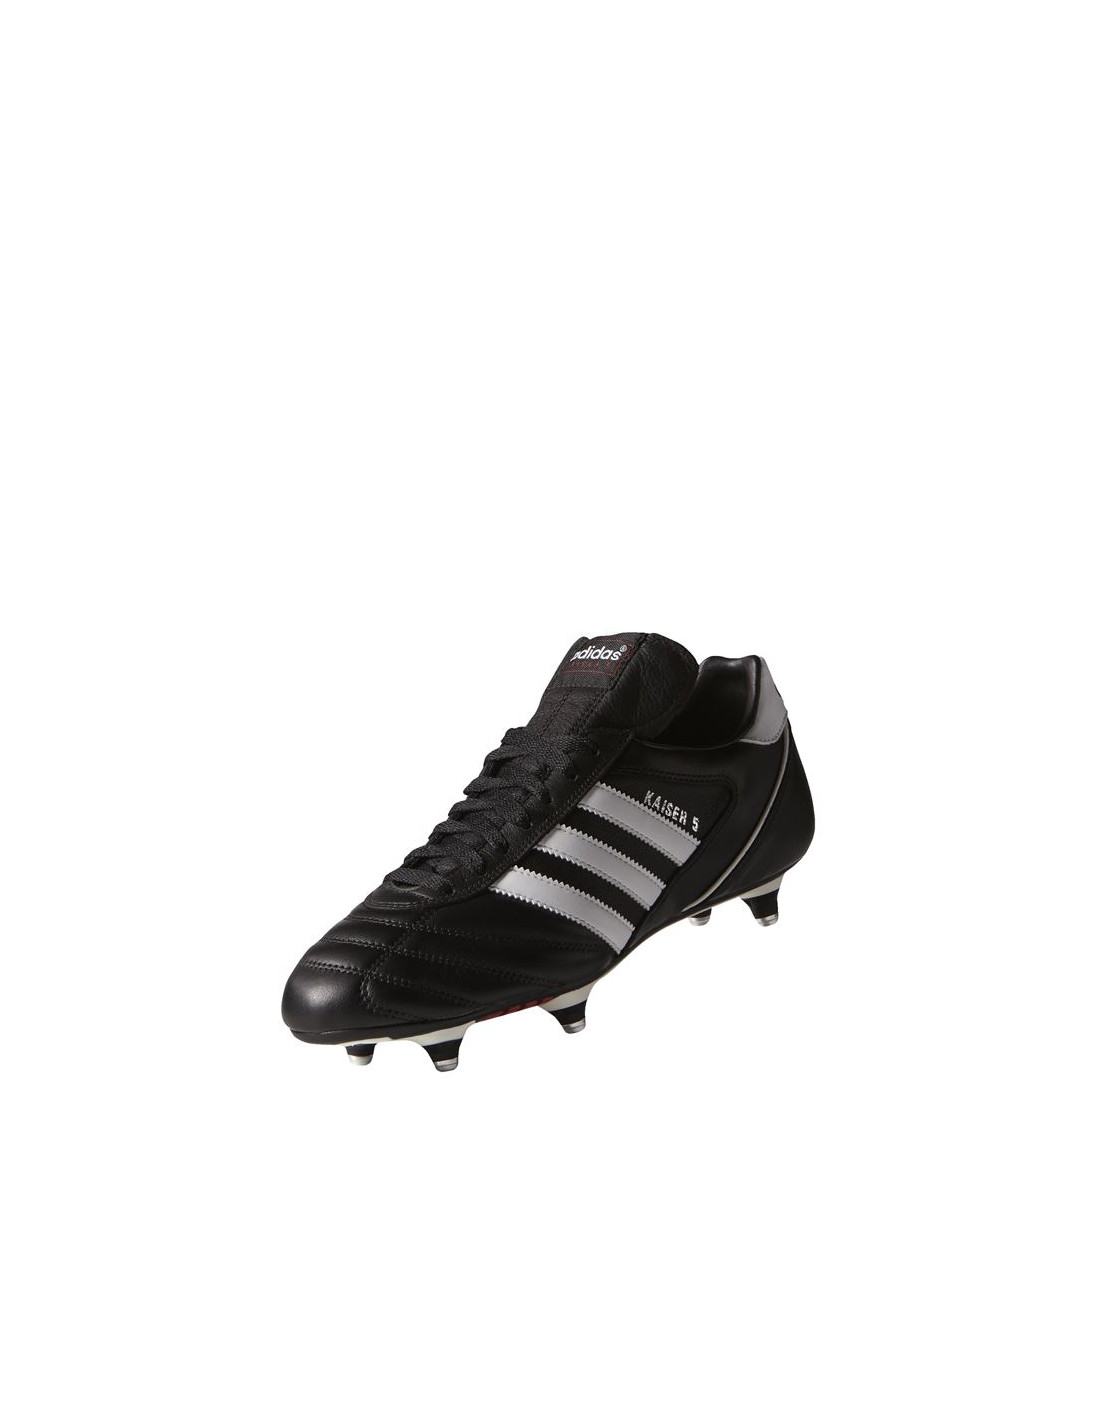 ᐈ Botas de adidas Kaiser 5 Cup M Black/White – Atmosfera